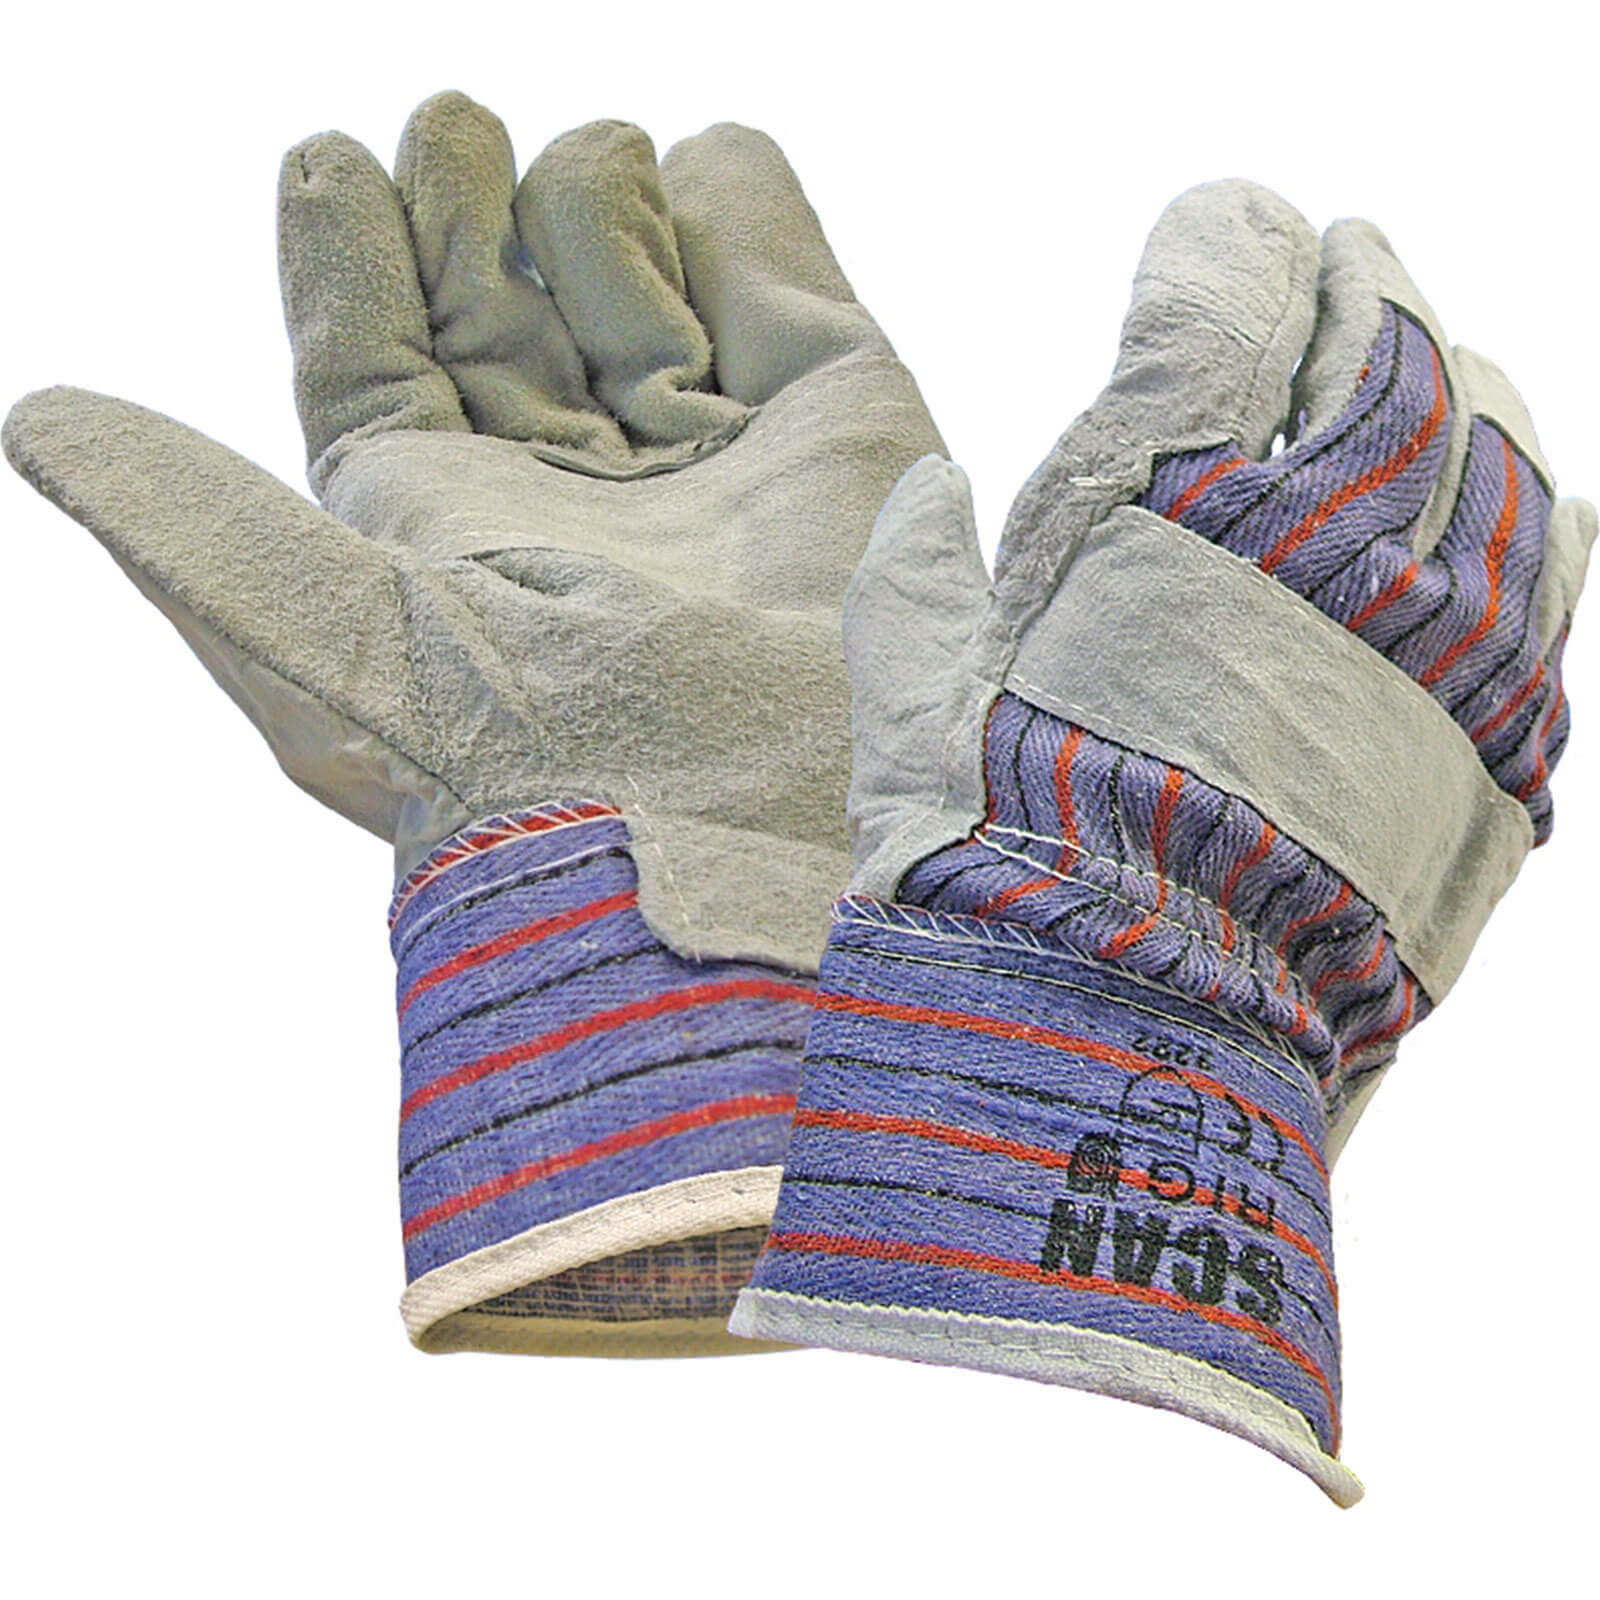 Photos - Safety Equipment SCAN Rigger Work Glove Grey / Purple One Size SCAGLORIG 